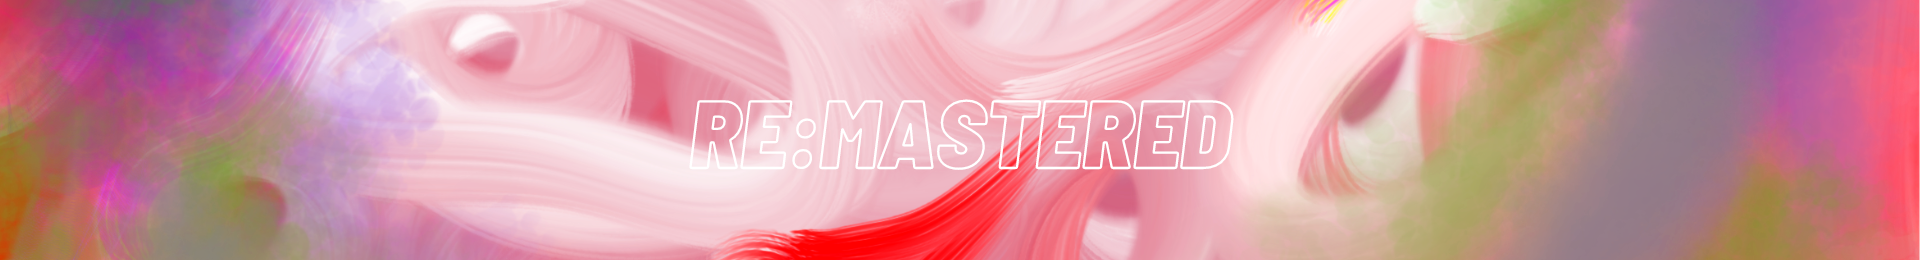 re:mastered banner